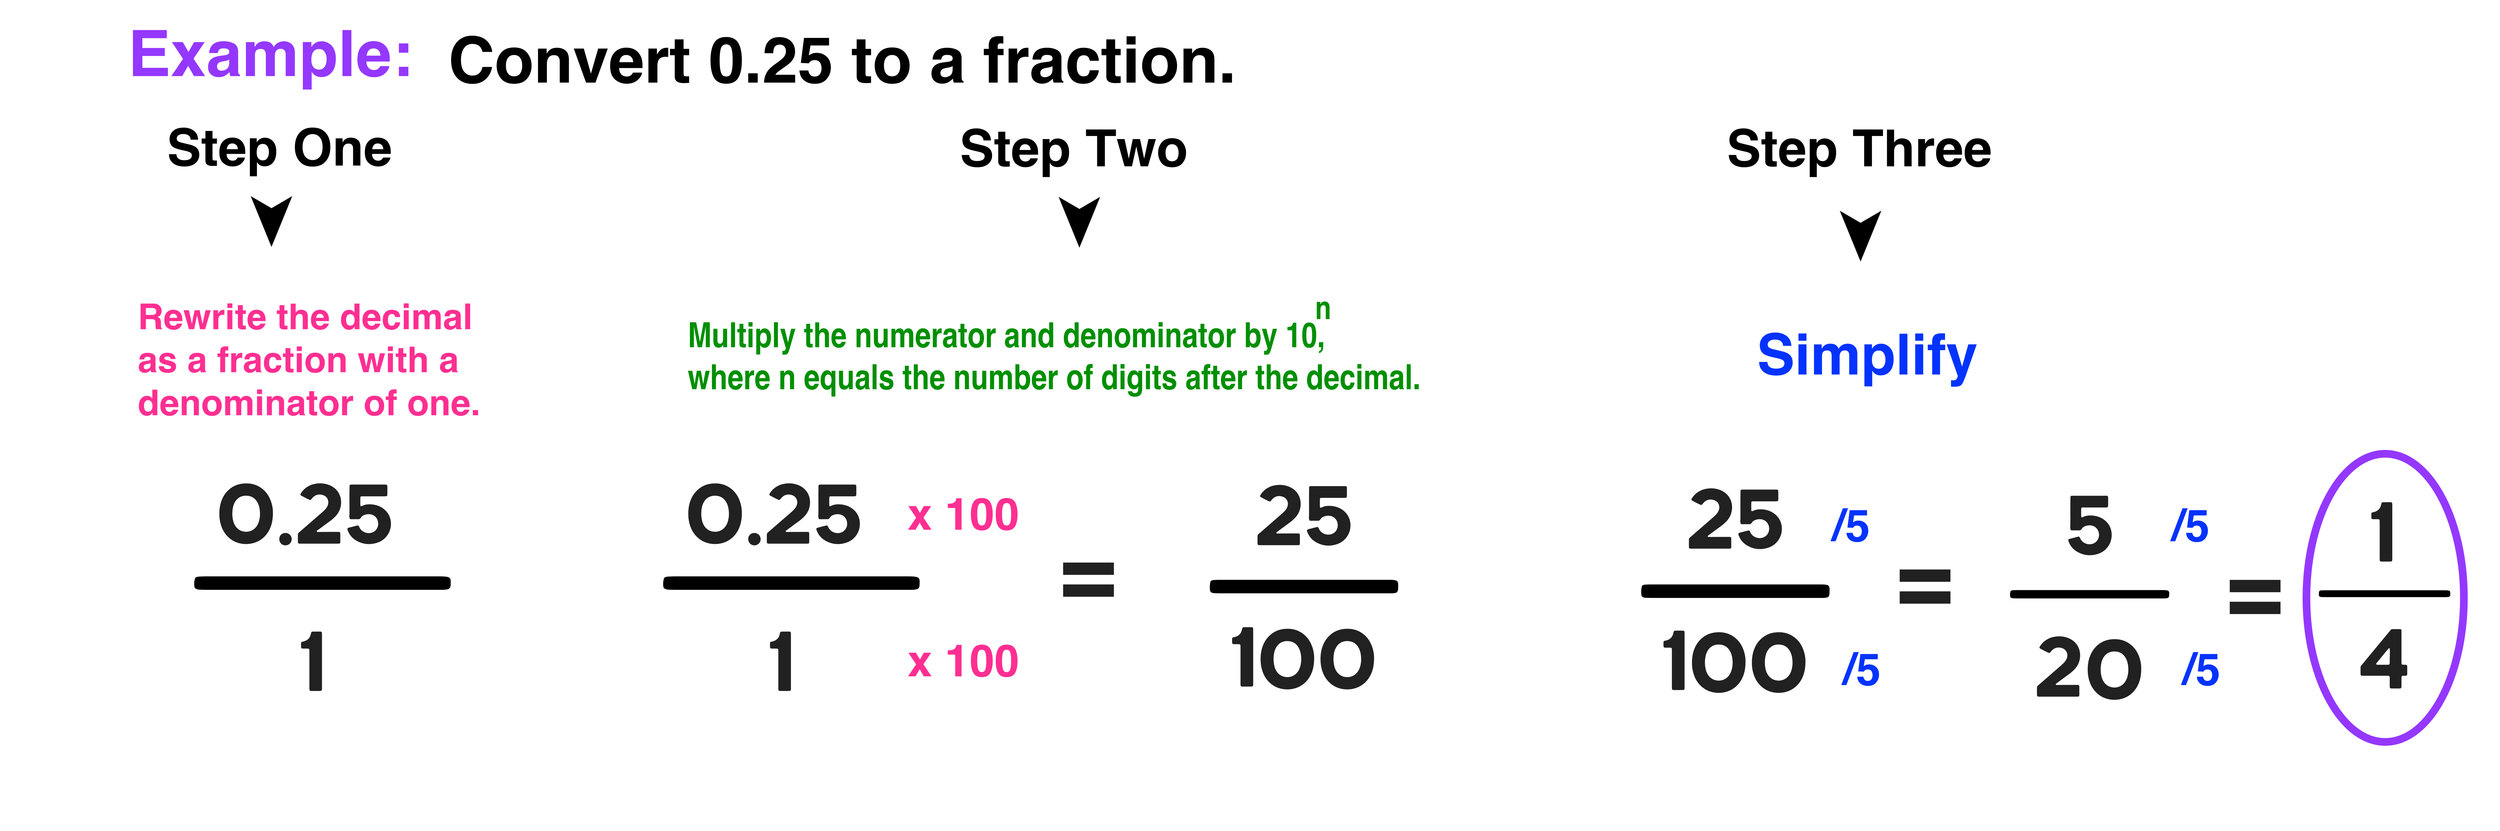 betting odds calculator decimals to fractions converter